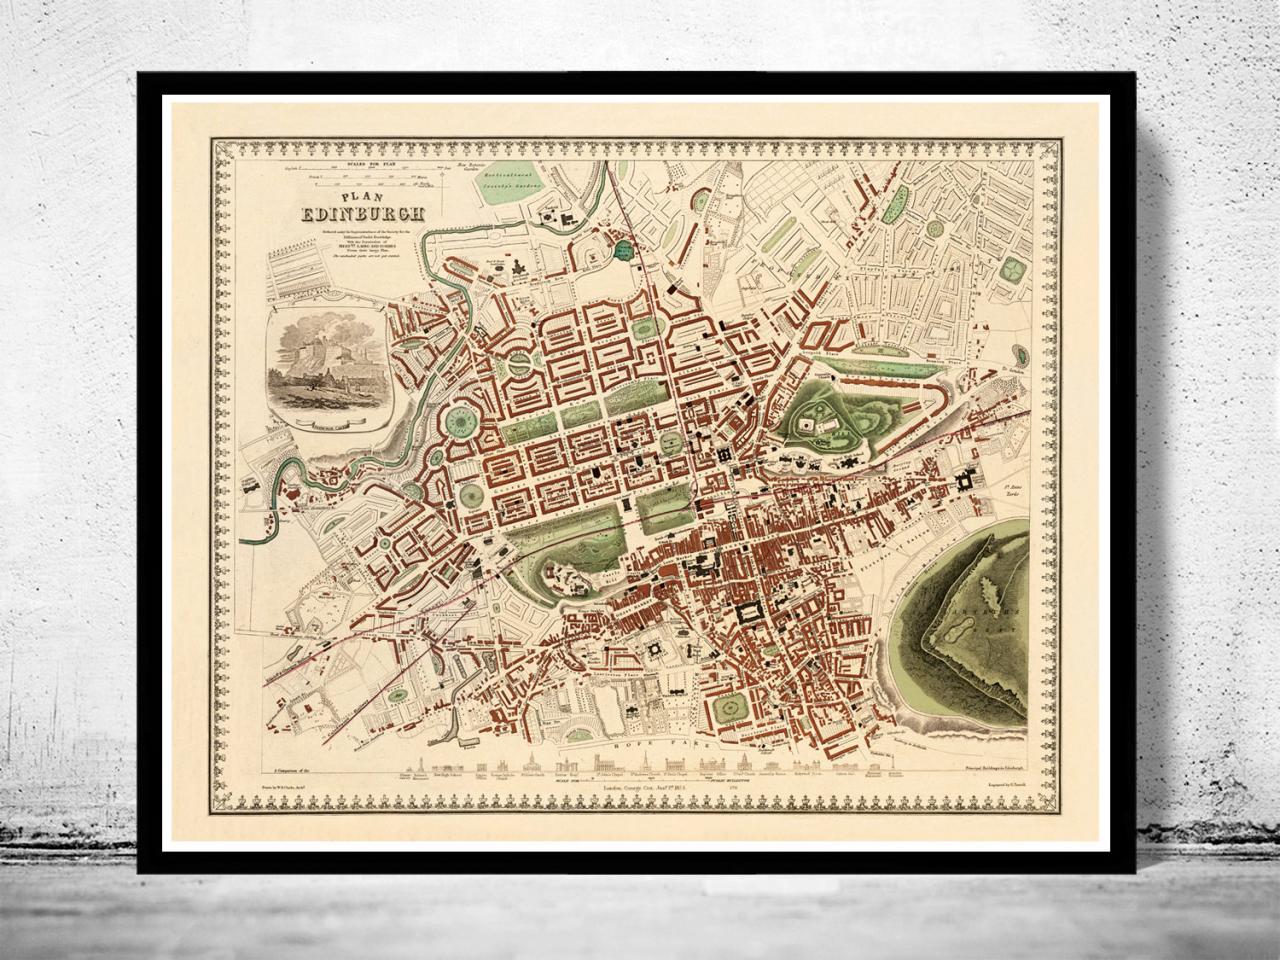 Old Map Of Edinburgh 1853 Edinbourg With Gravures, Scotland